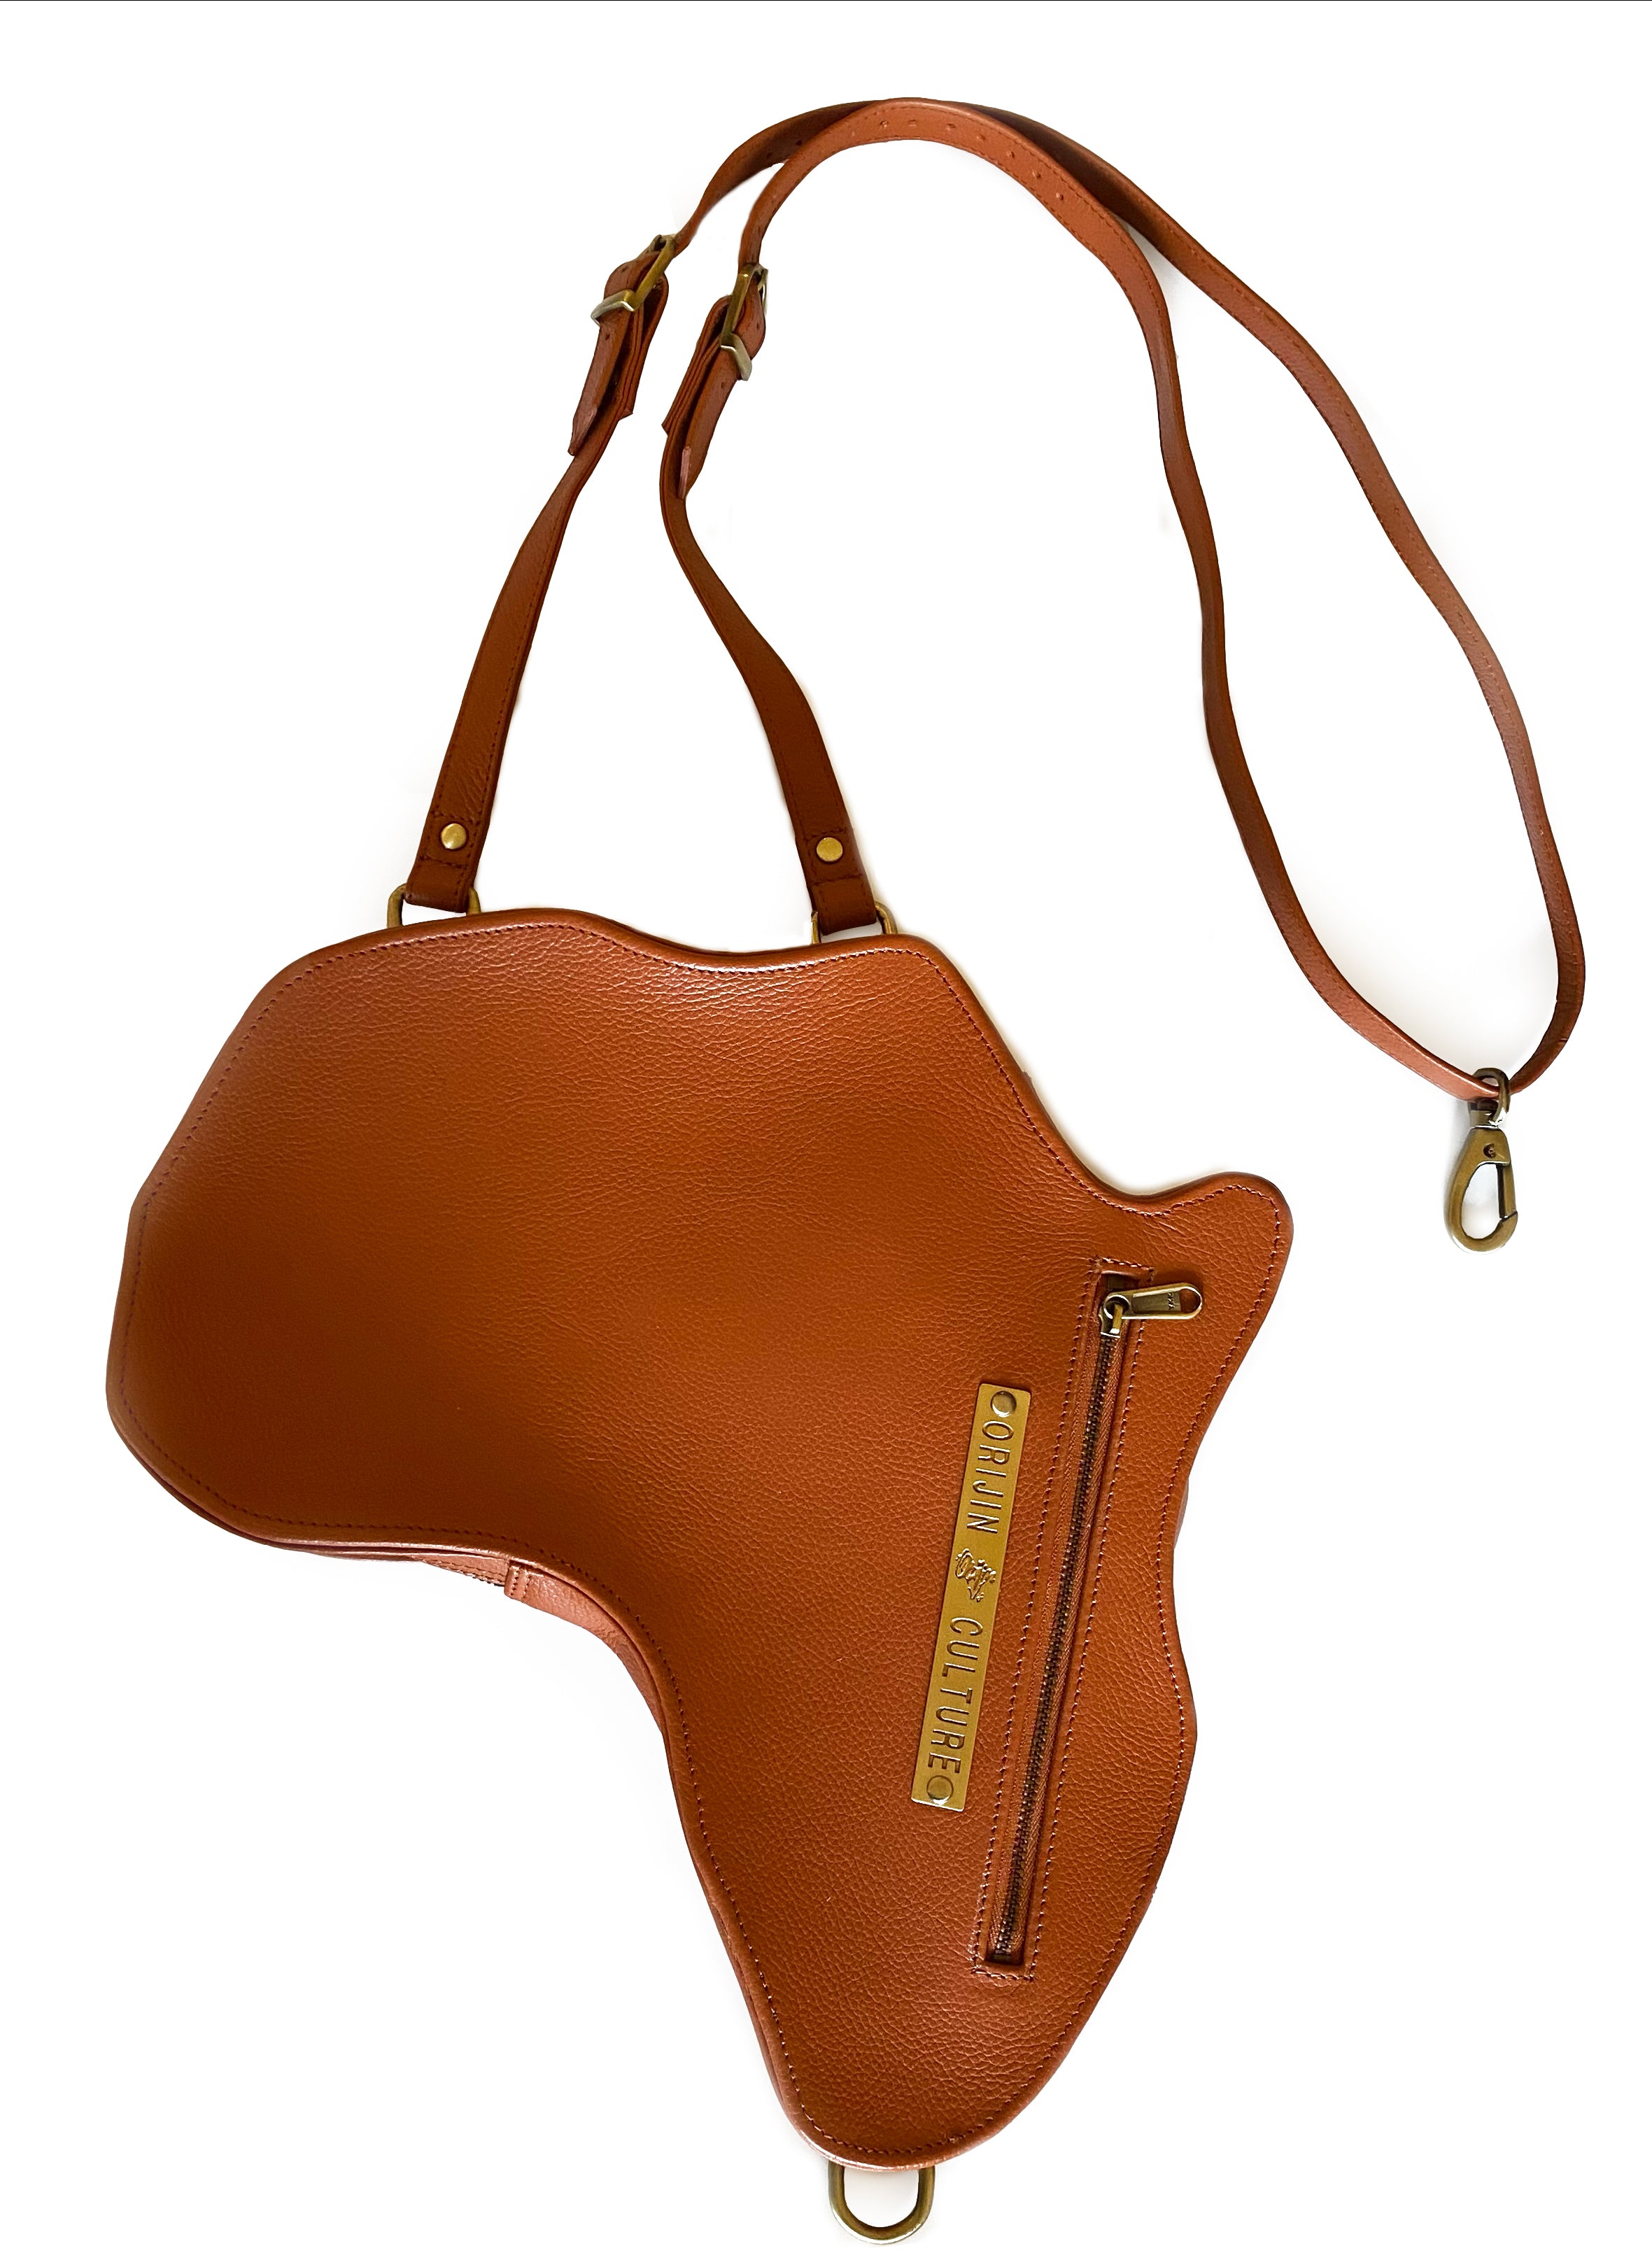 Africa shaped Bag / Backpack- Brown Leather (Large) - SHOP | Orijin Culture 